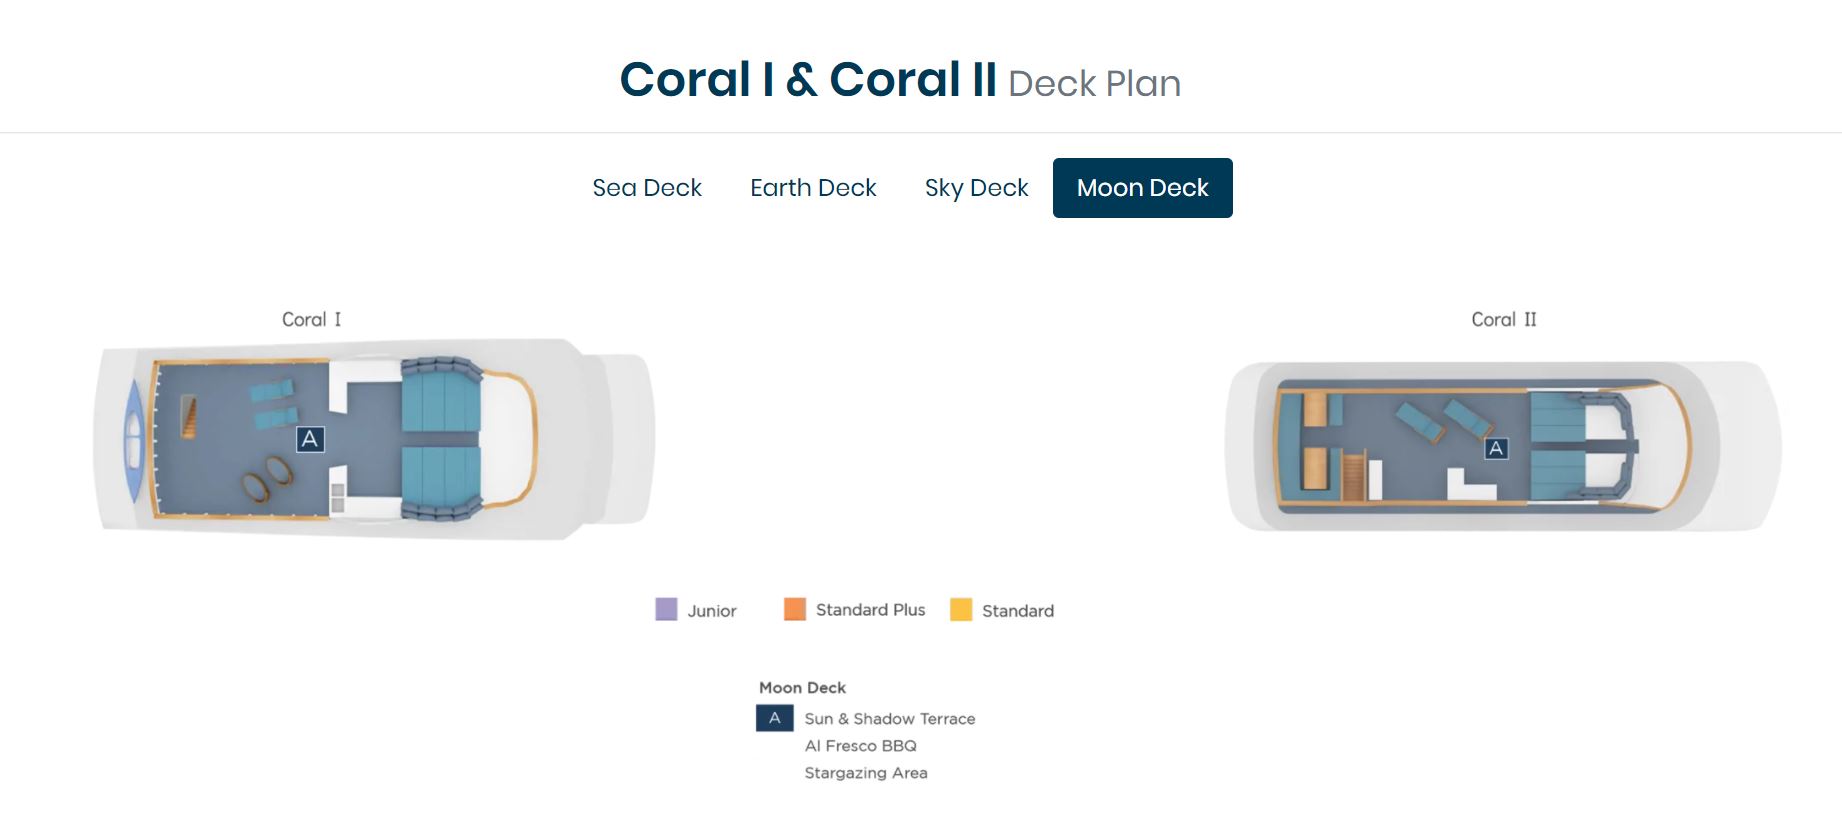 Coral I Boutique-Yacht: Coral I Boutique-Yacht 8 days/7 nights cruise